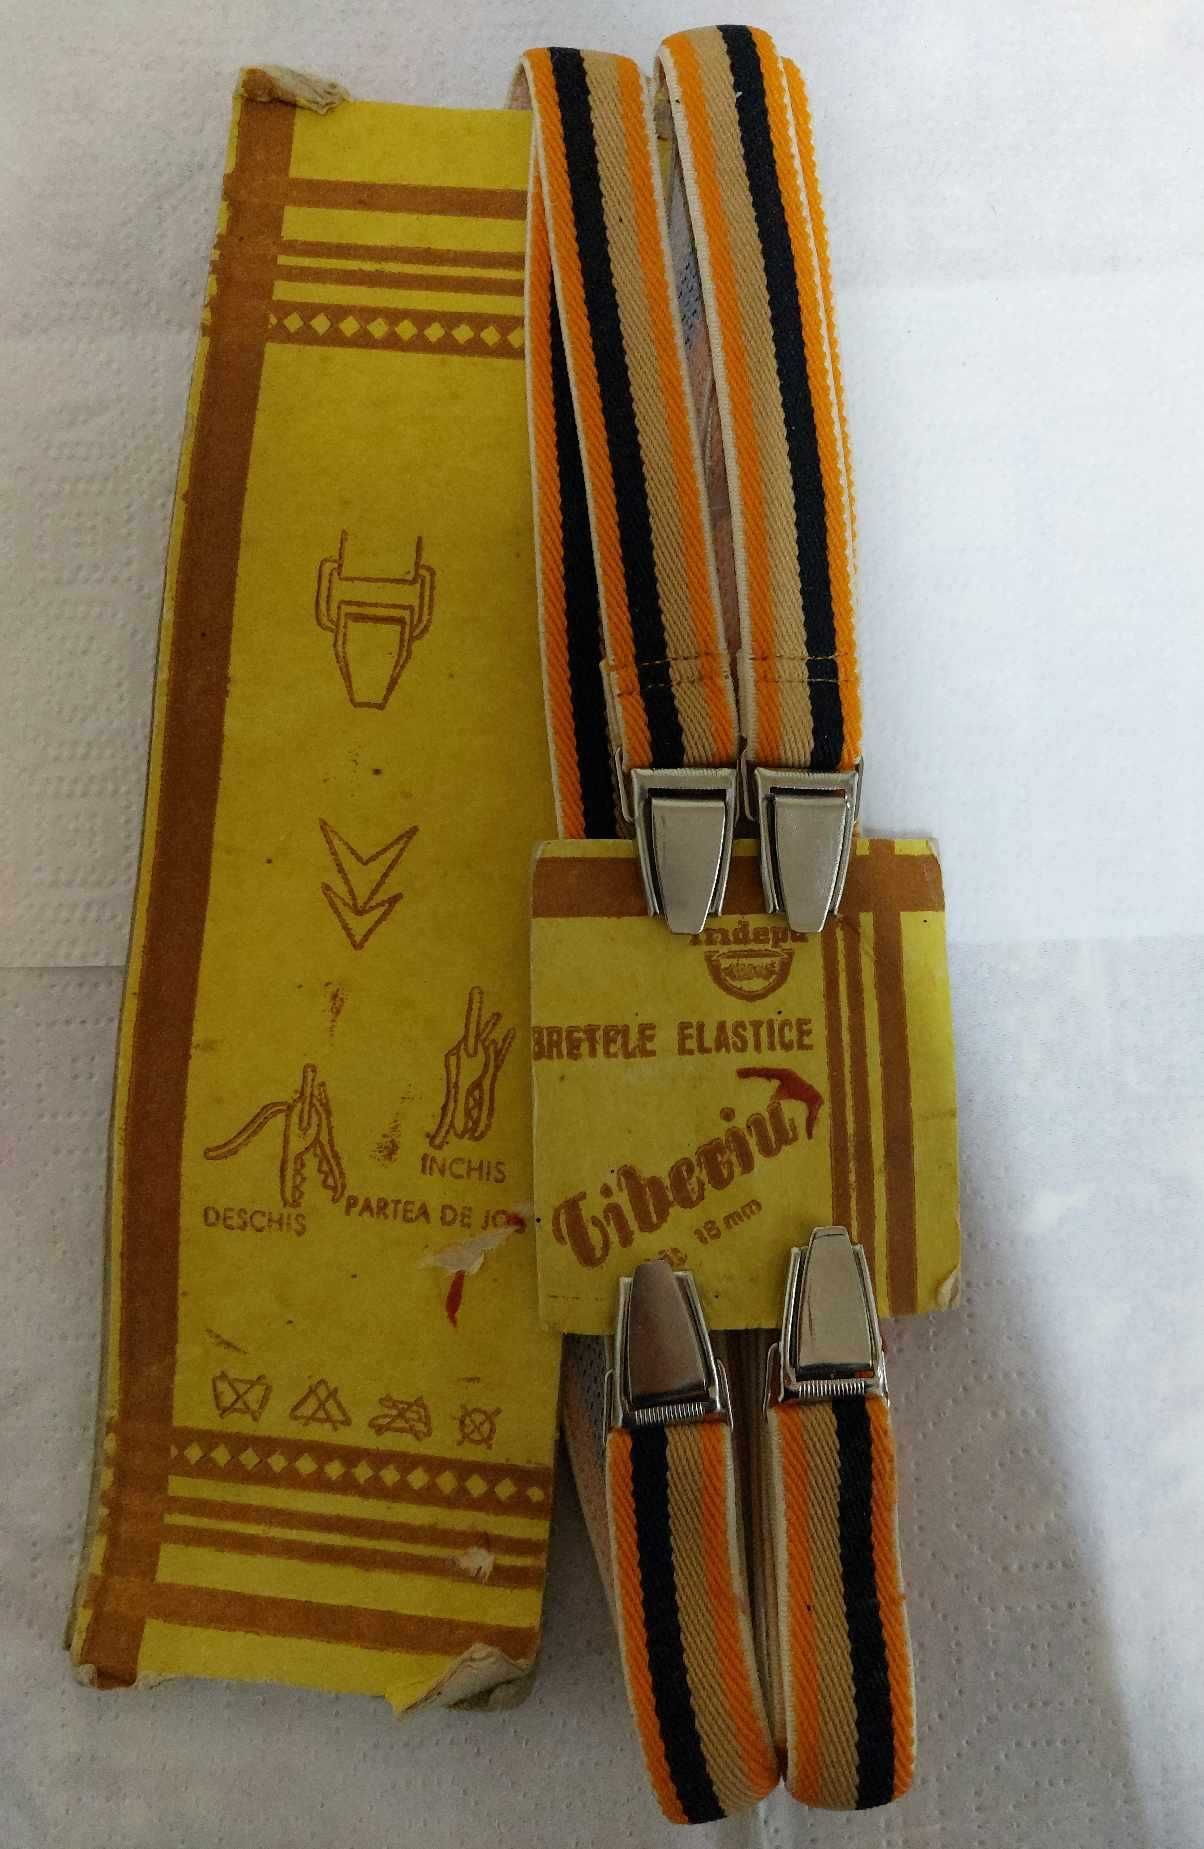 Bretele elastice 18mm Tiberiu anii 80 din perioada comunista